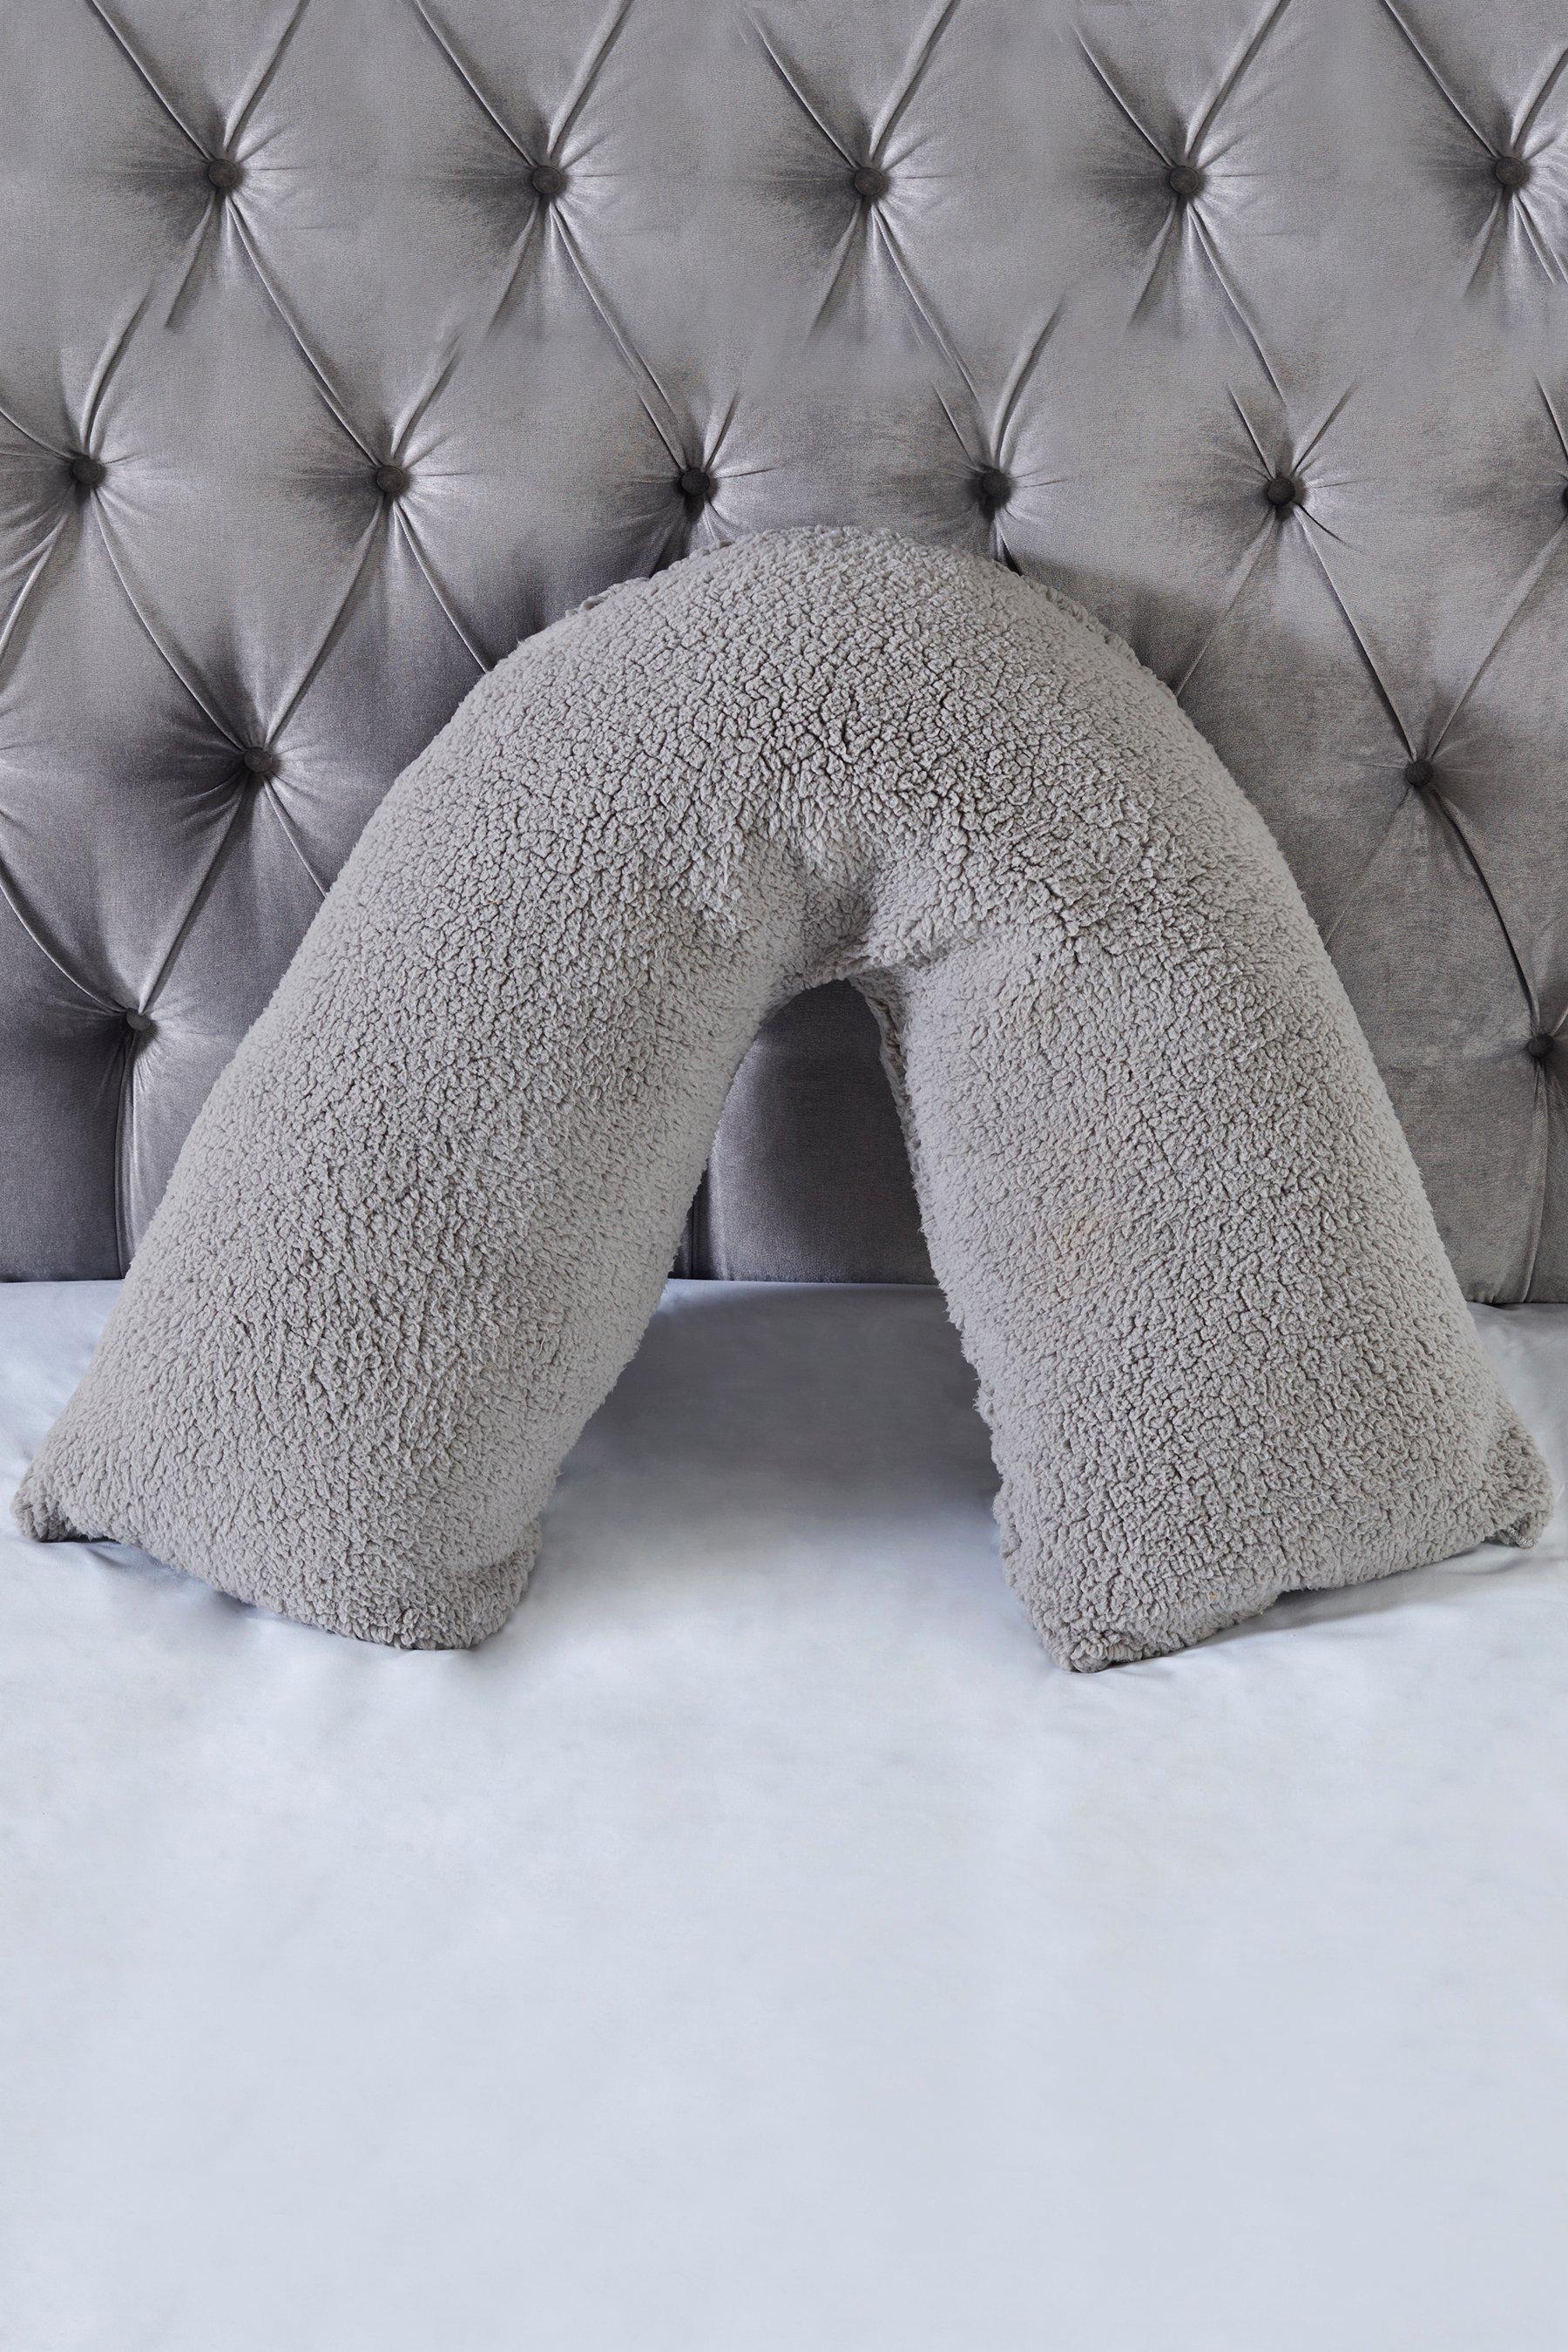 teddy v shaped pillow